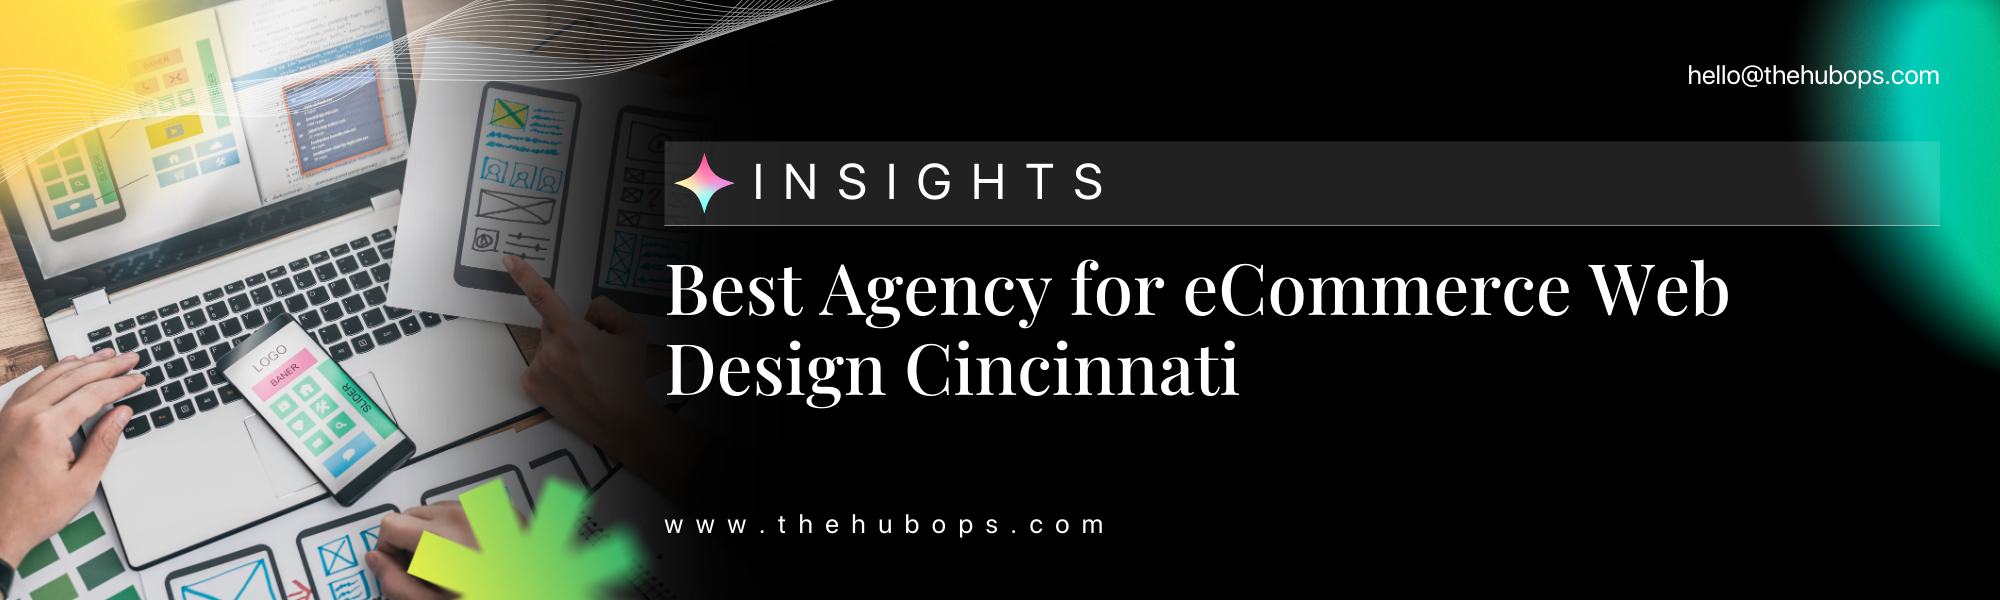 Best Agency for eCommerce Web Design Cincinnati